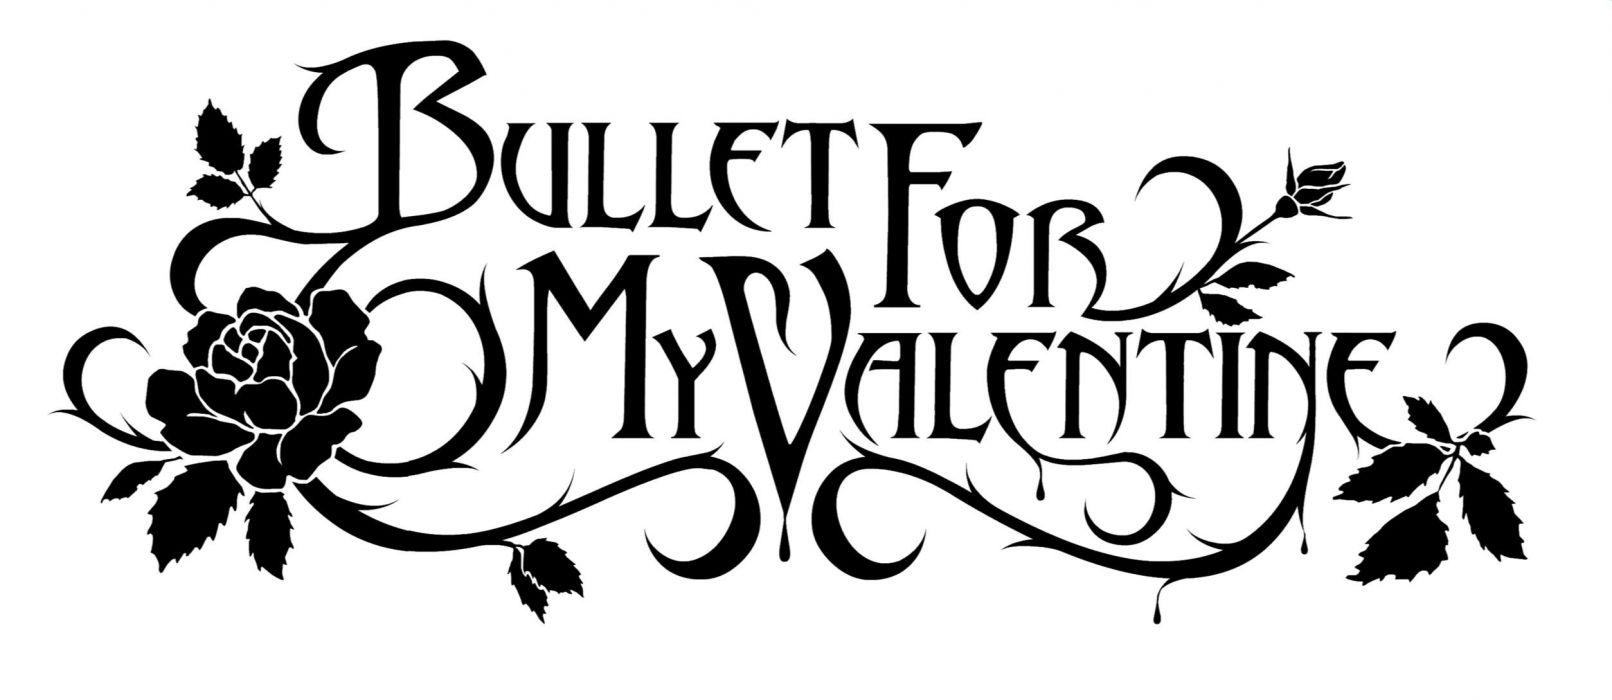 Bullet for My Valentine Logo - BULLET FOR MY VALENTINE heavy metal metalcore (41) wallpaper